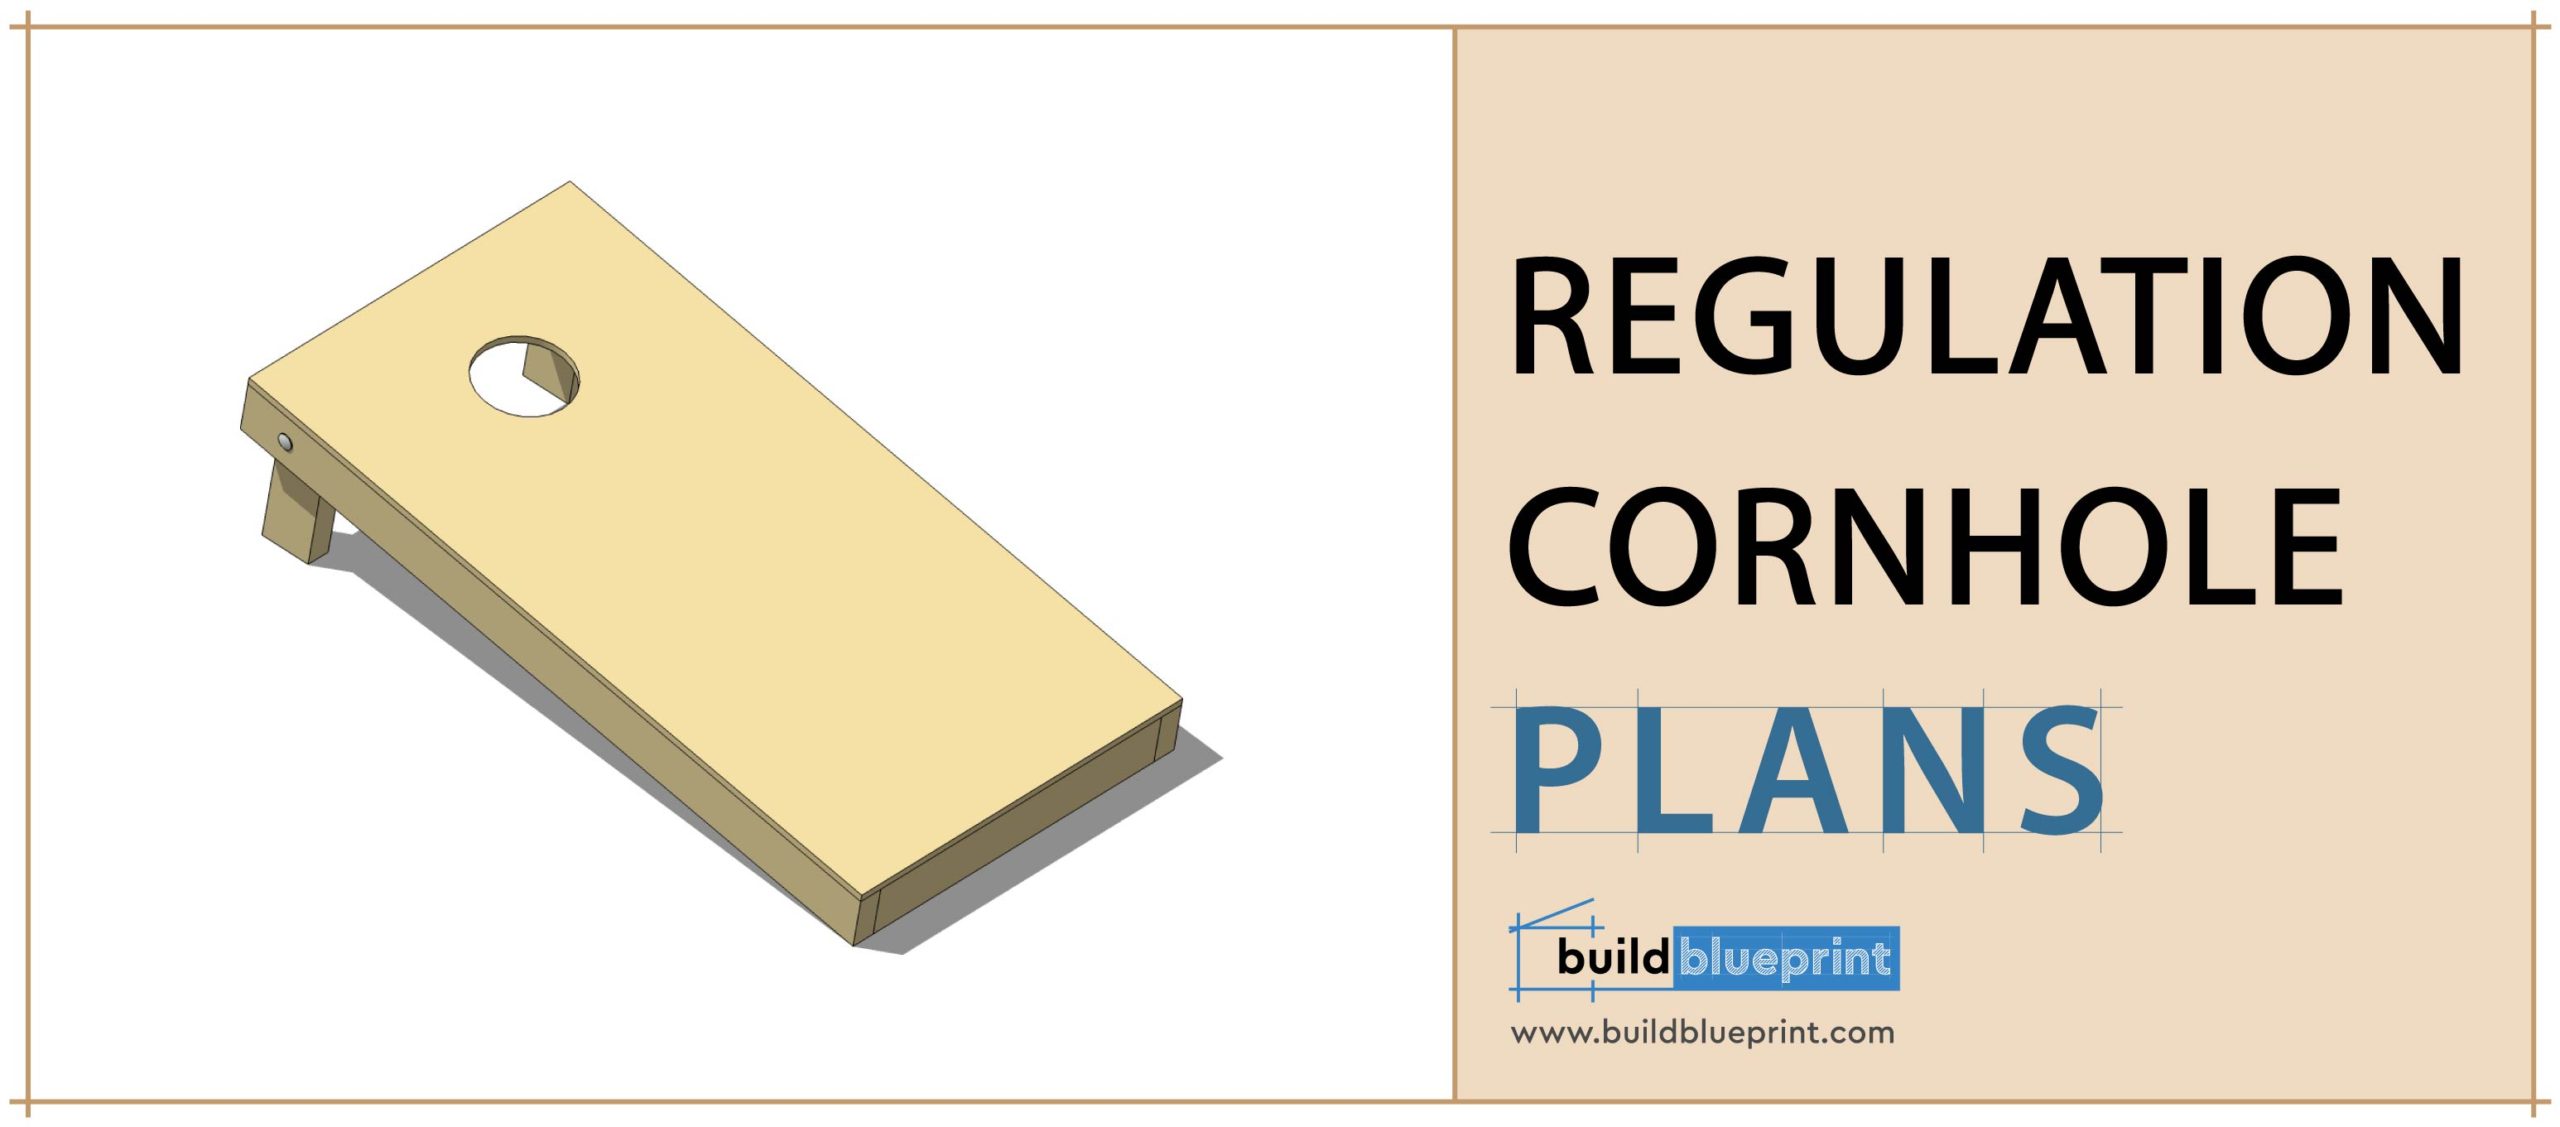 Cornhole Board Plans - Build Blueprint